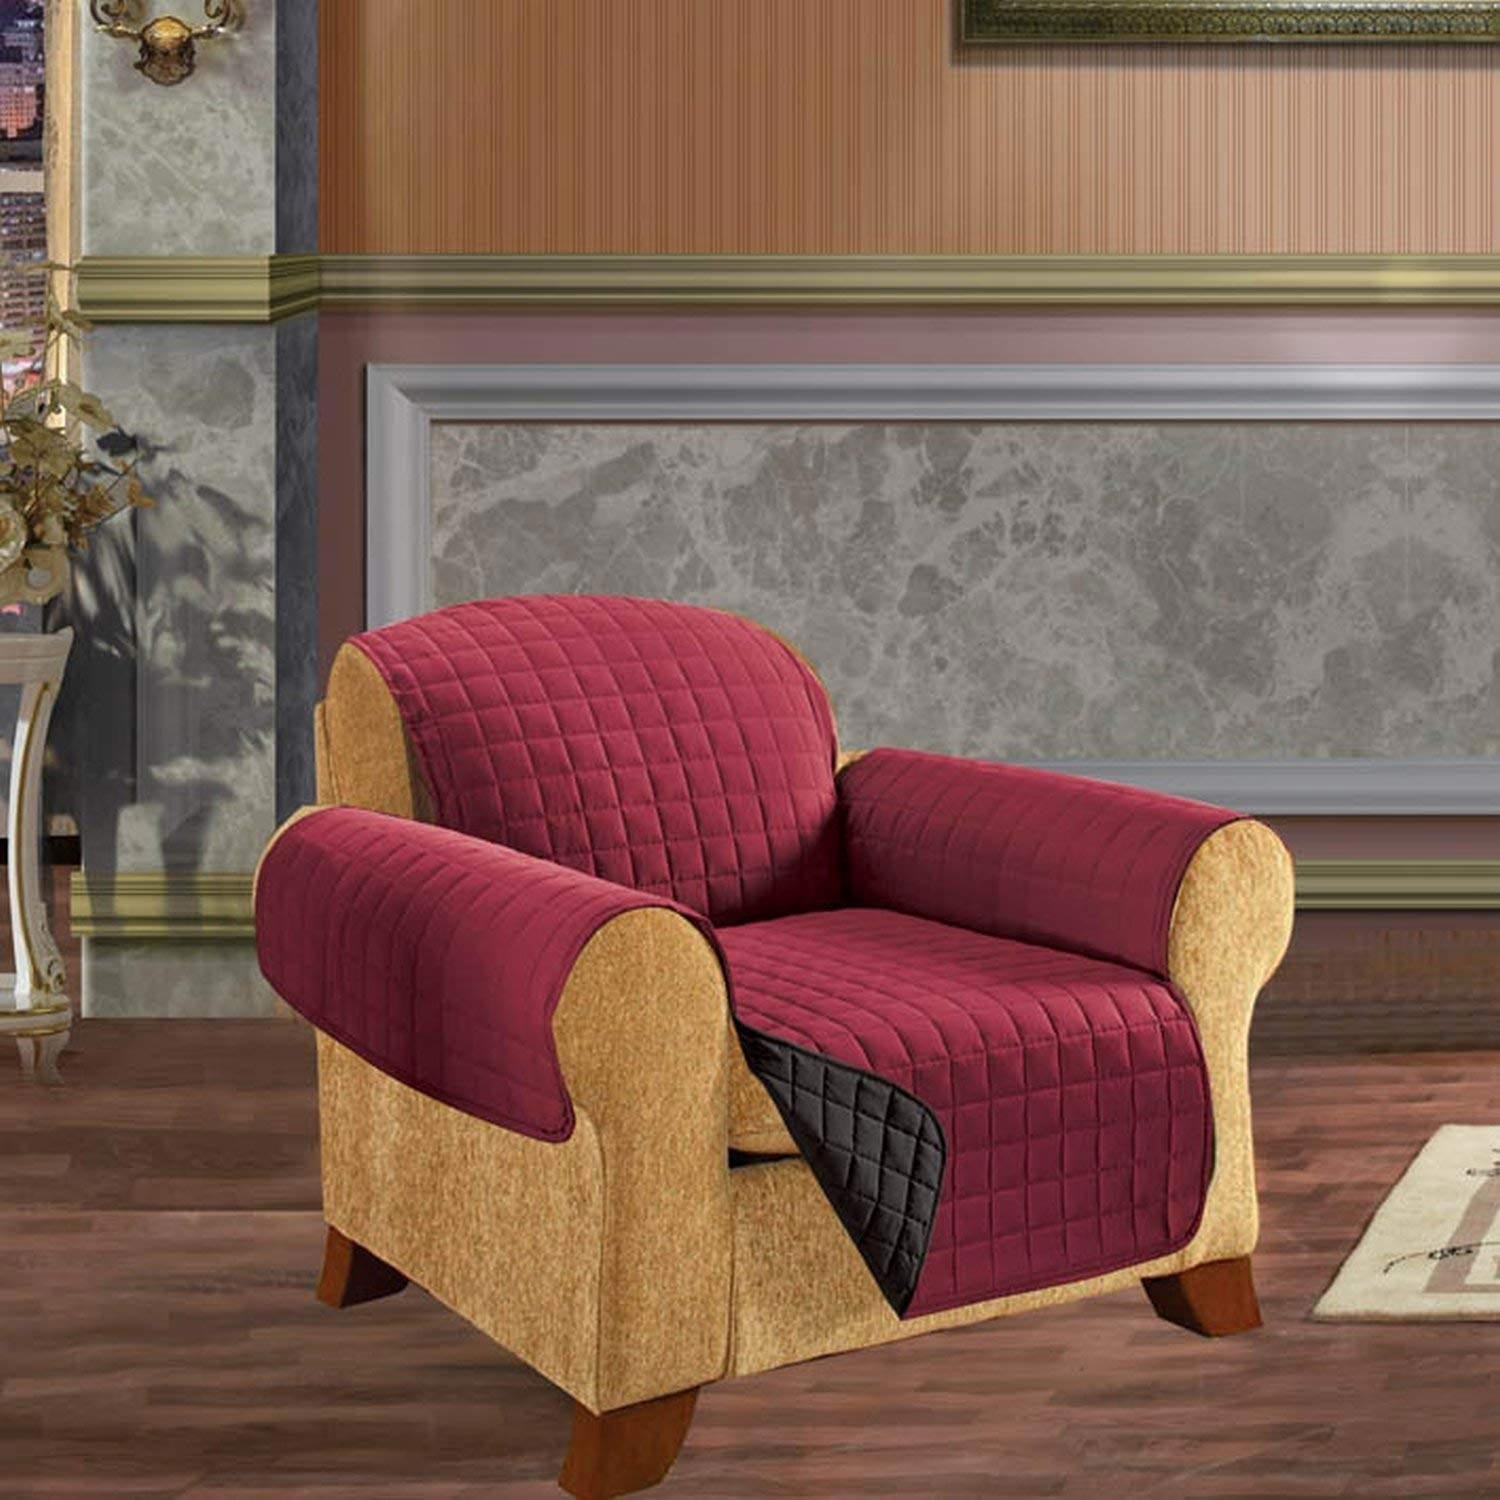 Elegant Comfort Quilted Furniture Protector